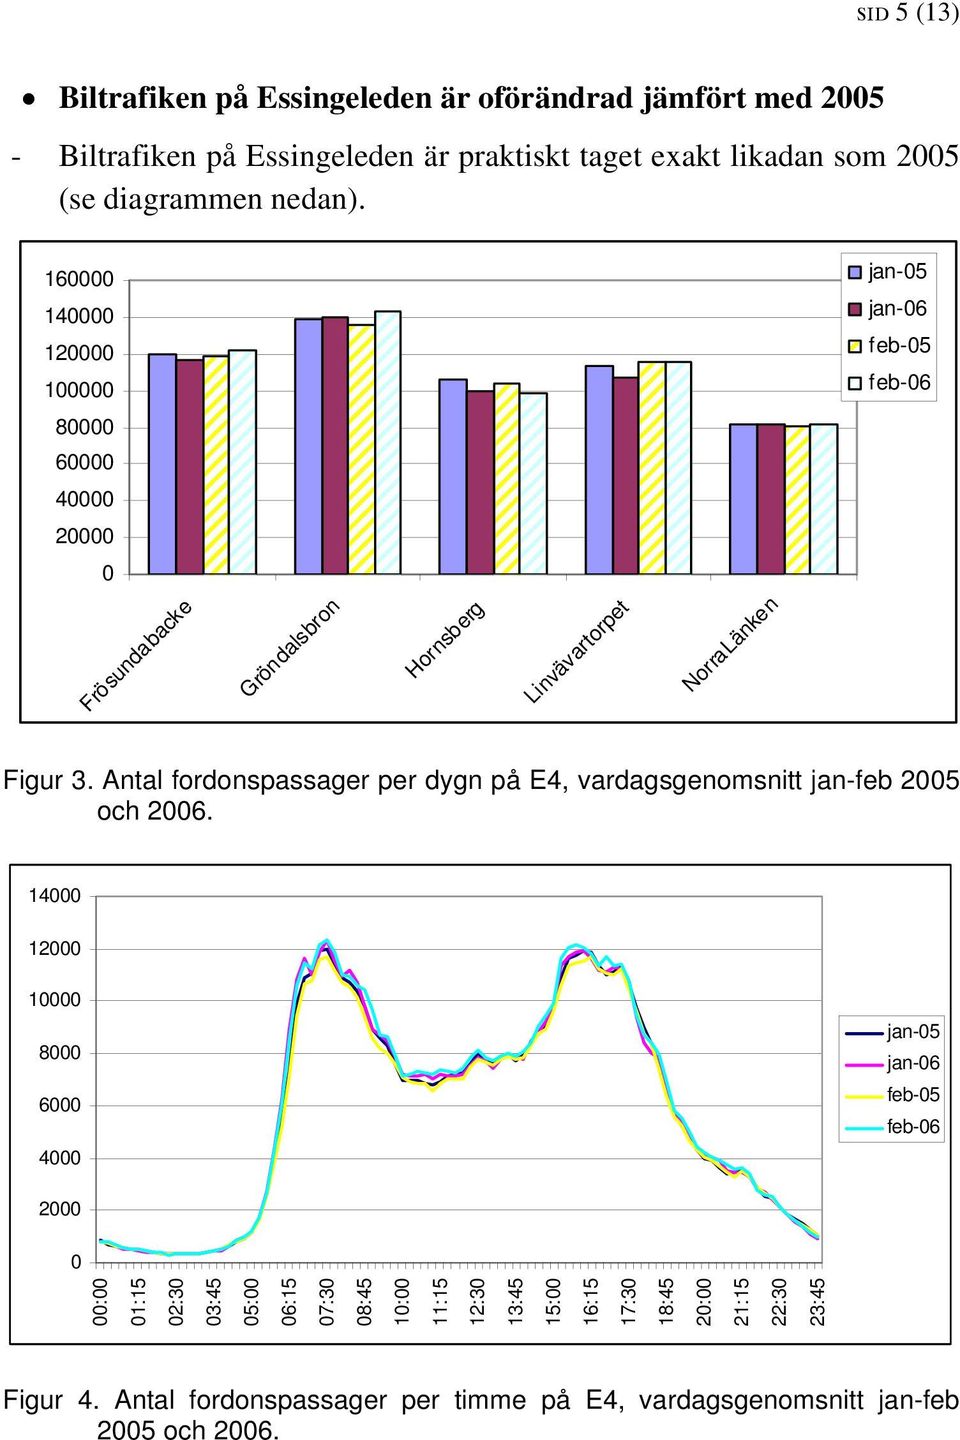 Antal fordonspassager per dygn på E4, vardagsgenomsnitt jan-feb 2005 och 2006.